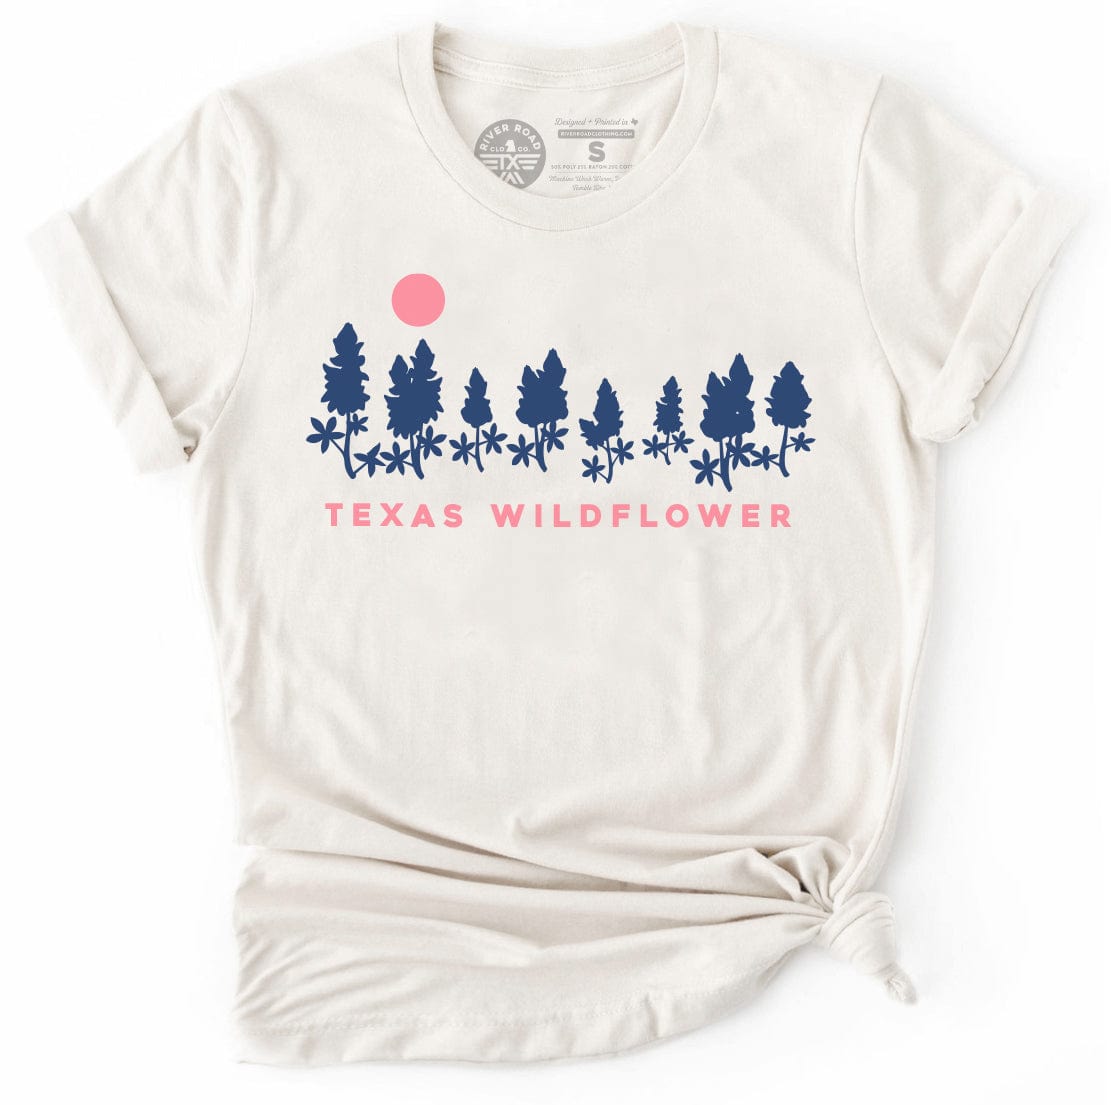 RIVER ROAD CLOTHING Shirts Texas Wildflower